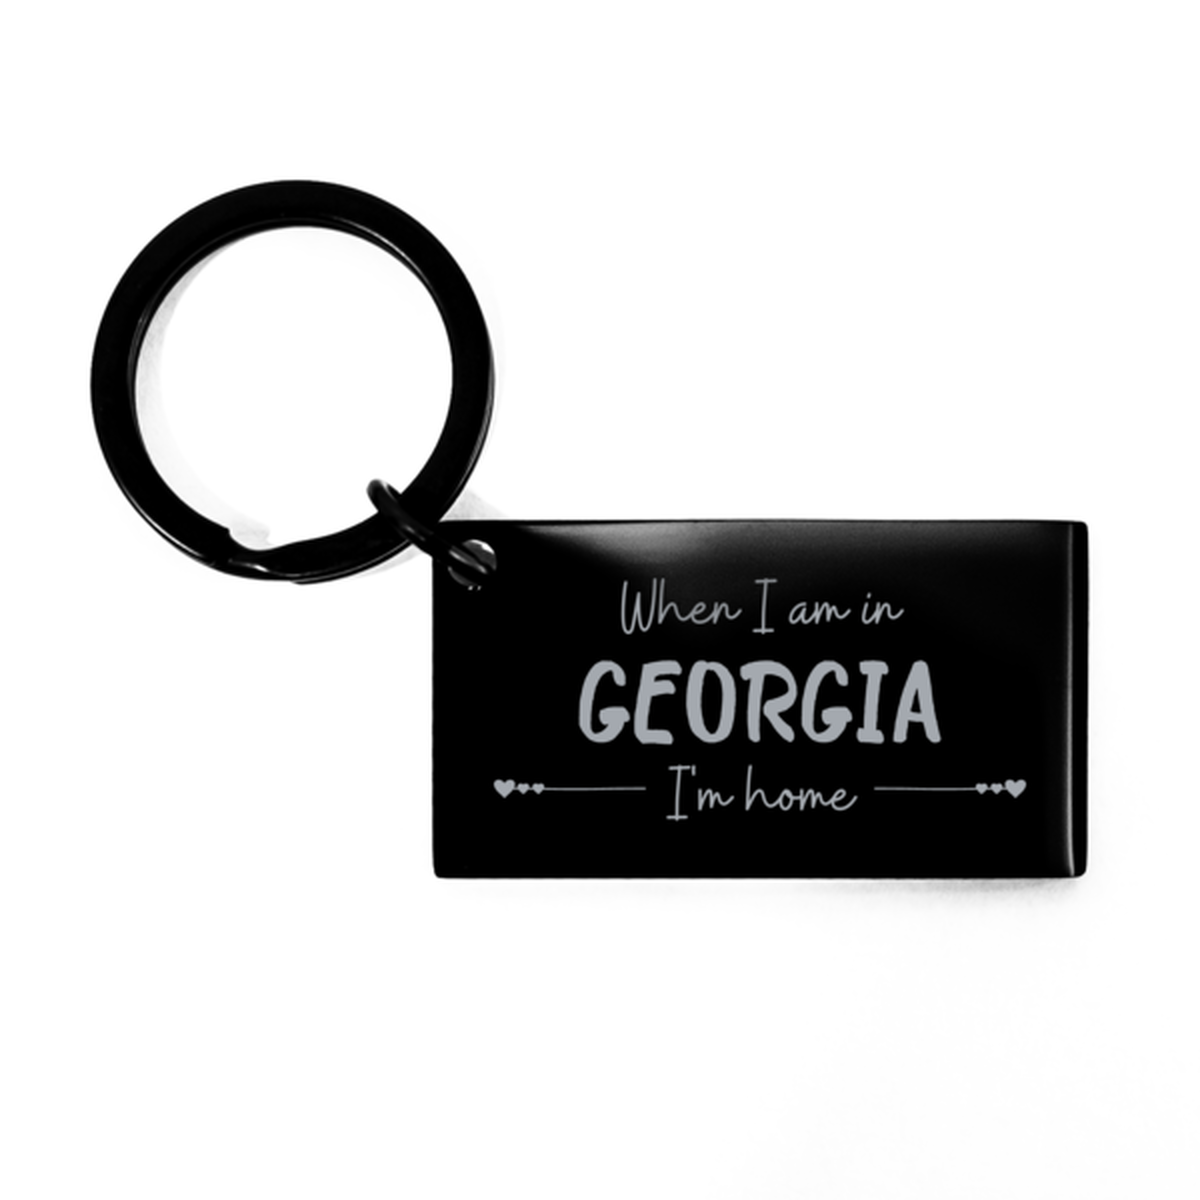 When I am in Georgia I'm home Keychain, Cheap Gifts For Georgia, State Georgia Birthday Gifts for Friends Coworker